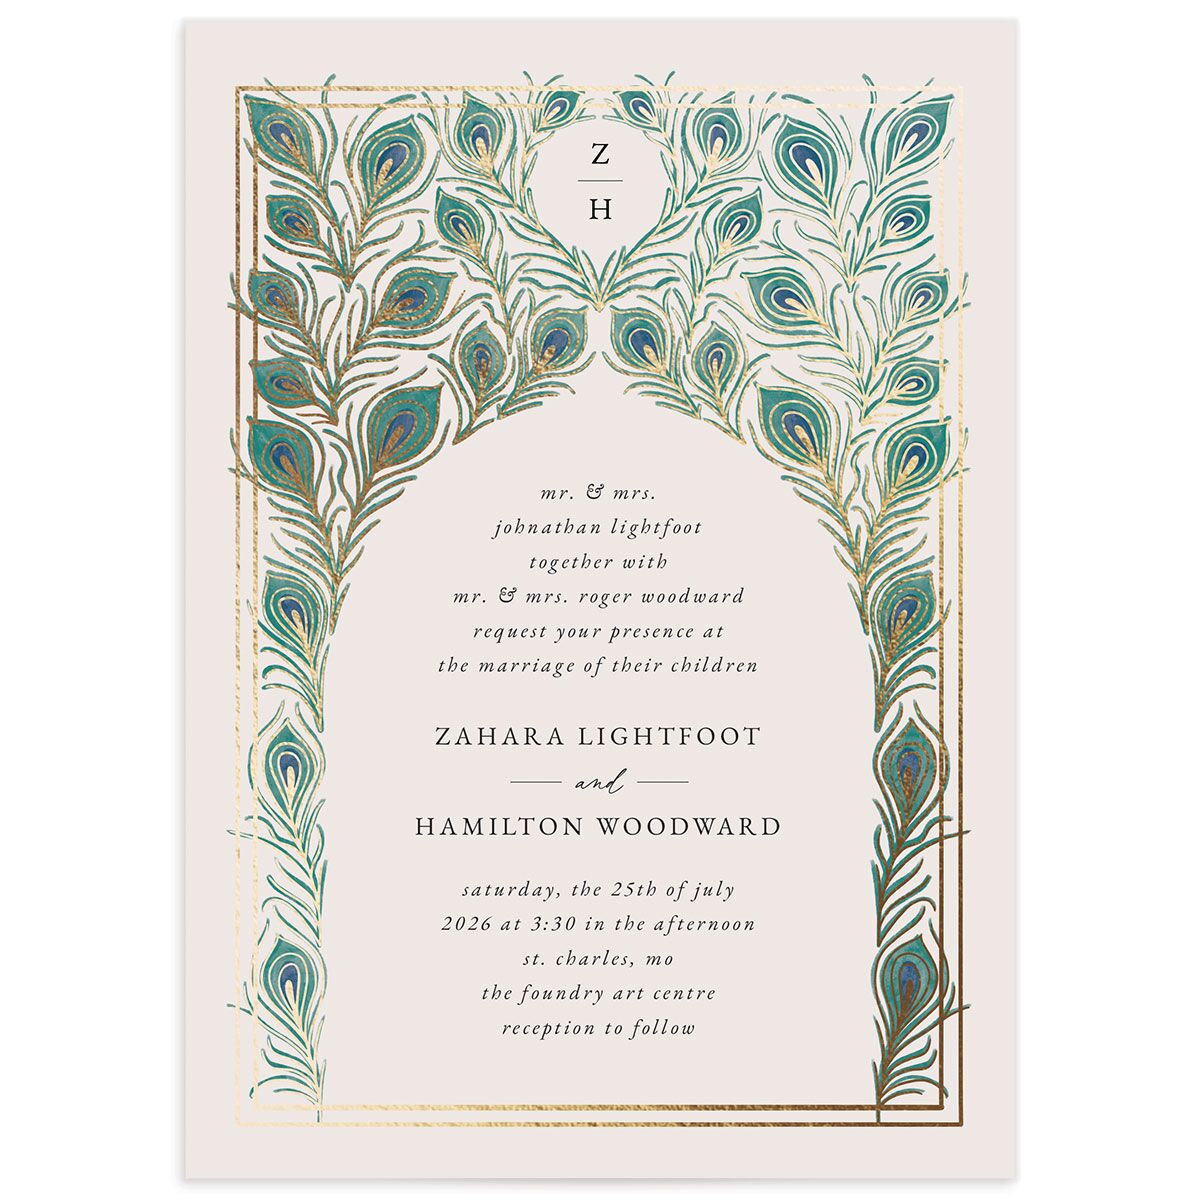 Peacock Nouveau Wedding Invitations